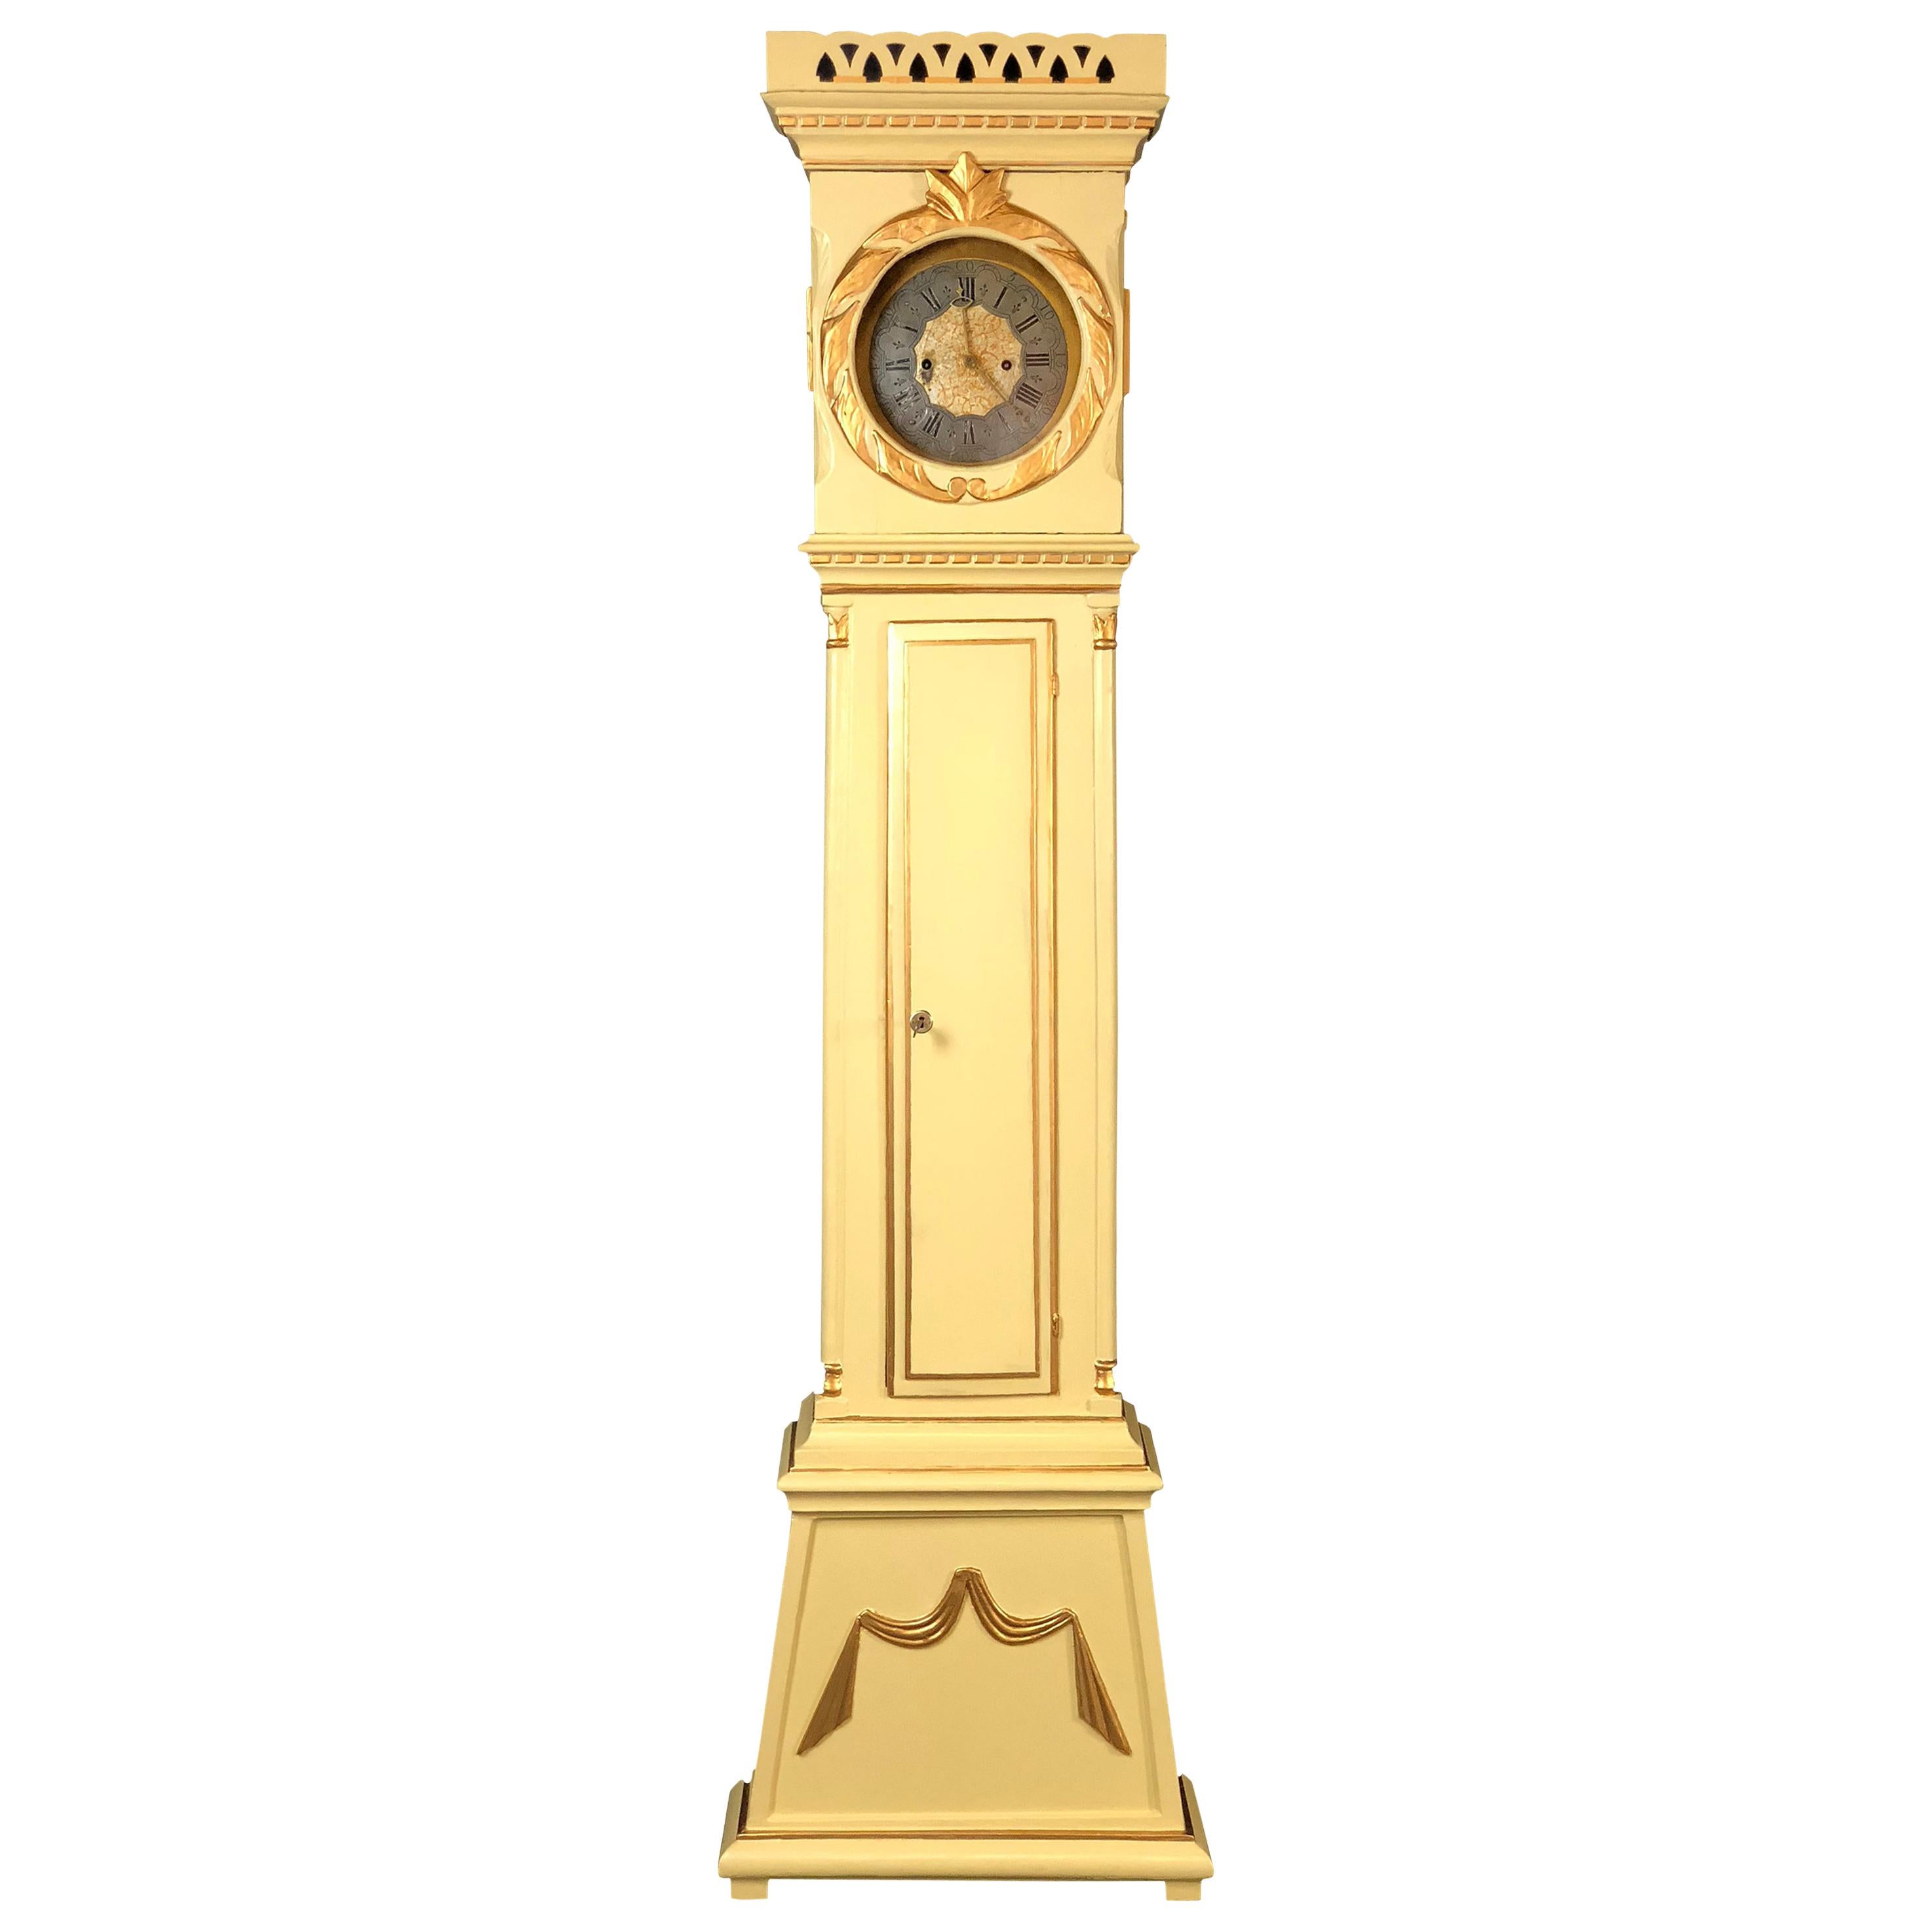 Early 19th Century Danish Long Case Clock by T Riis 1817